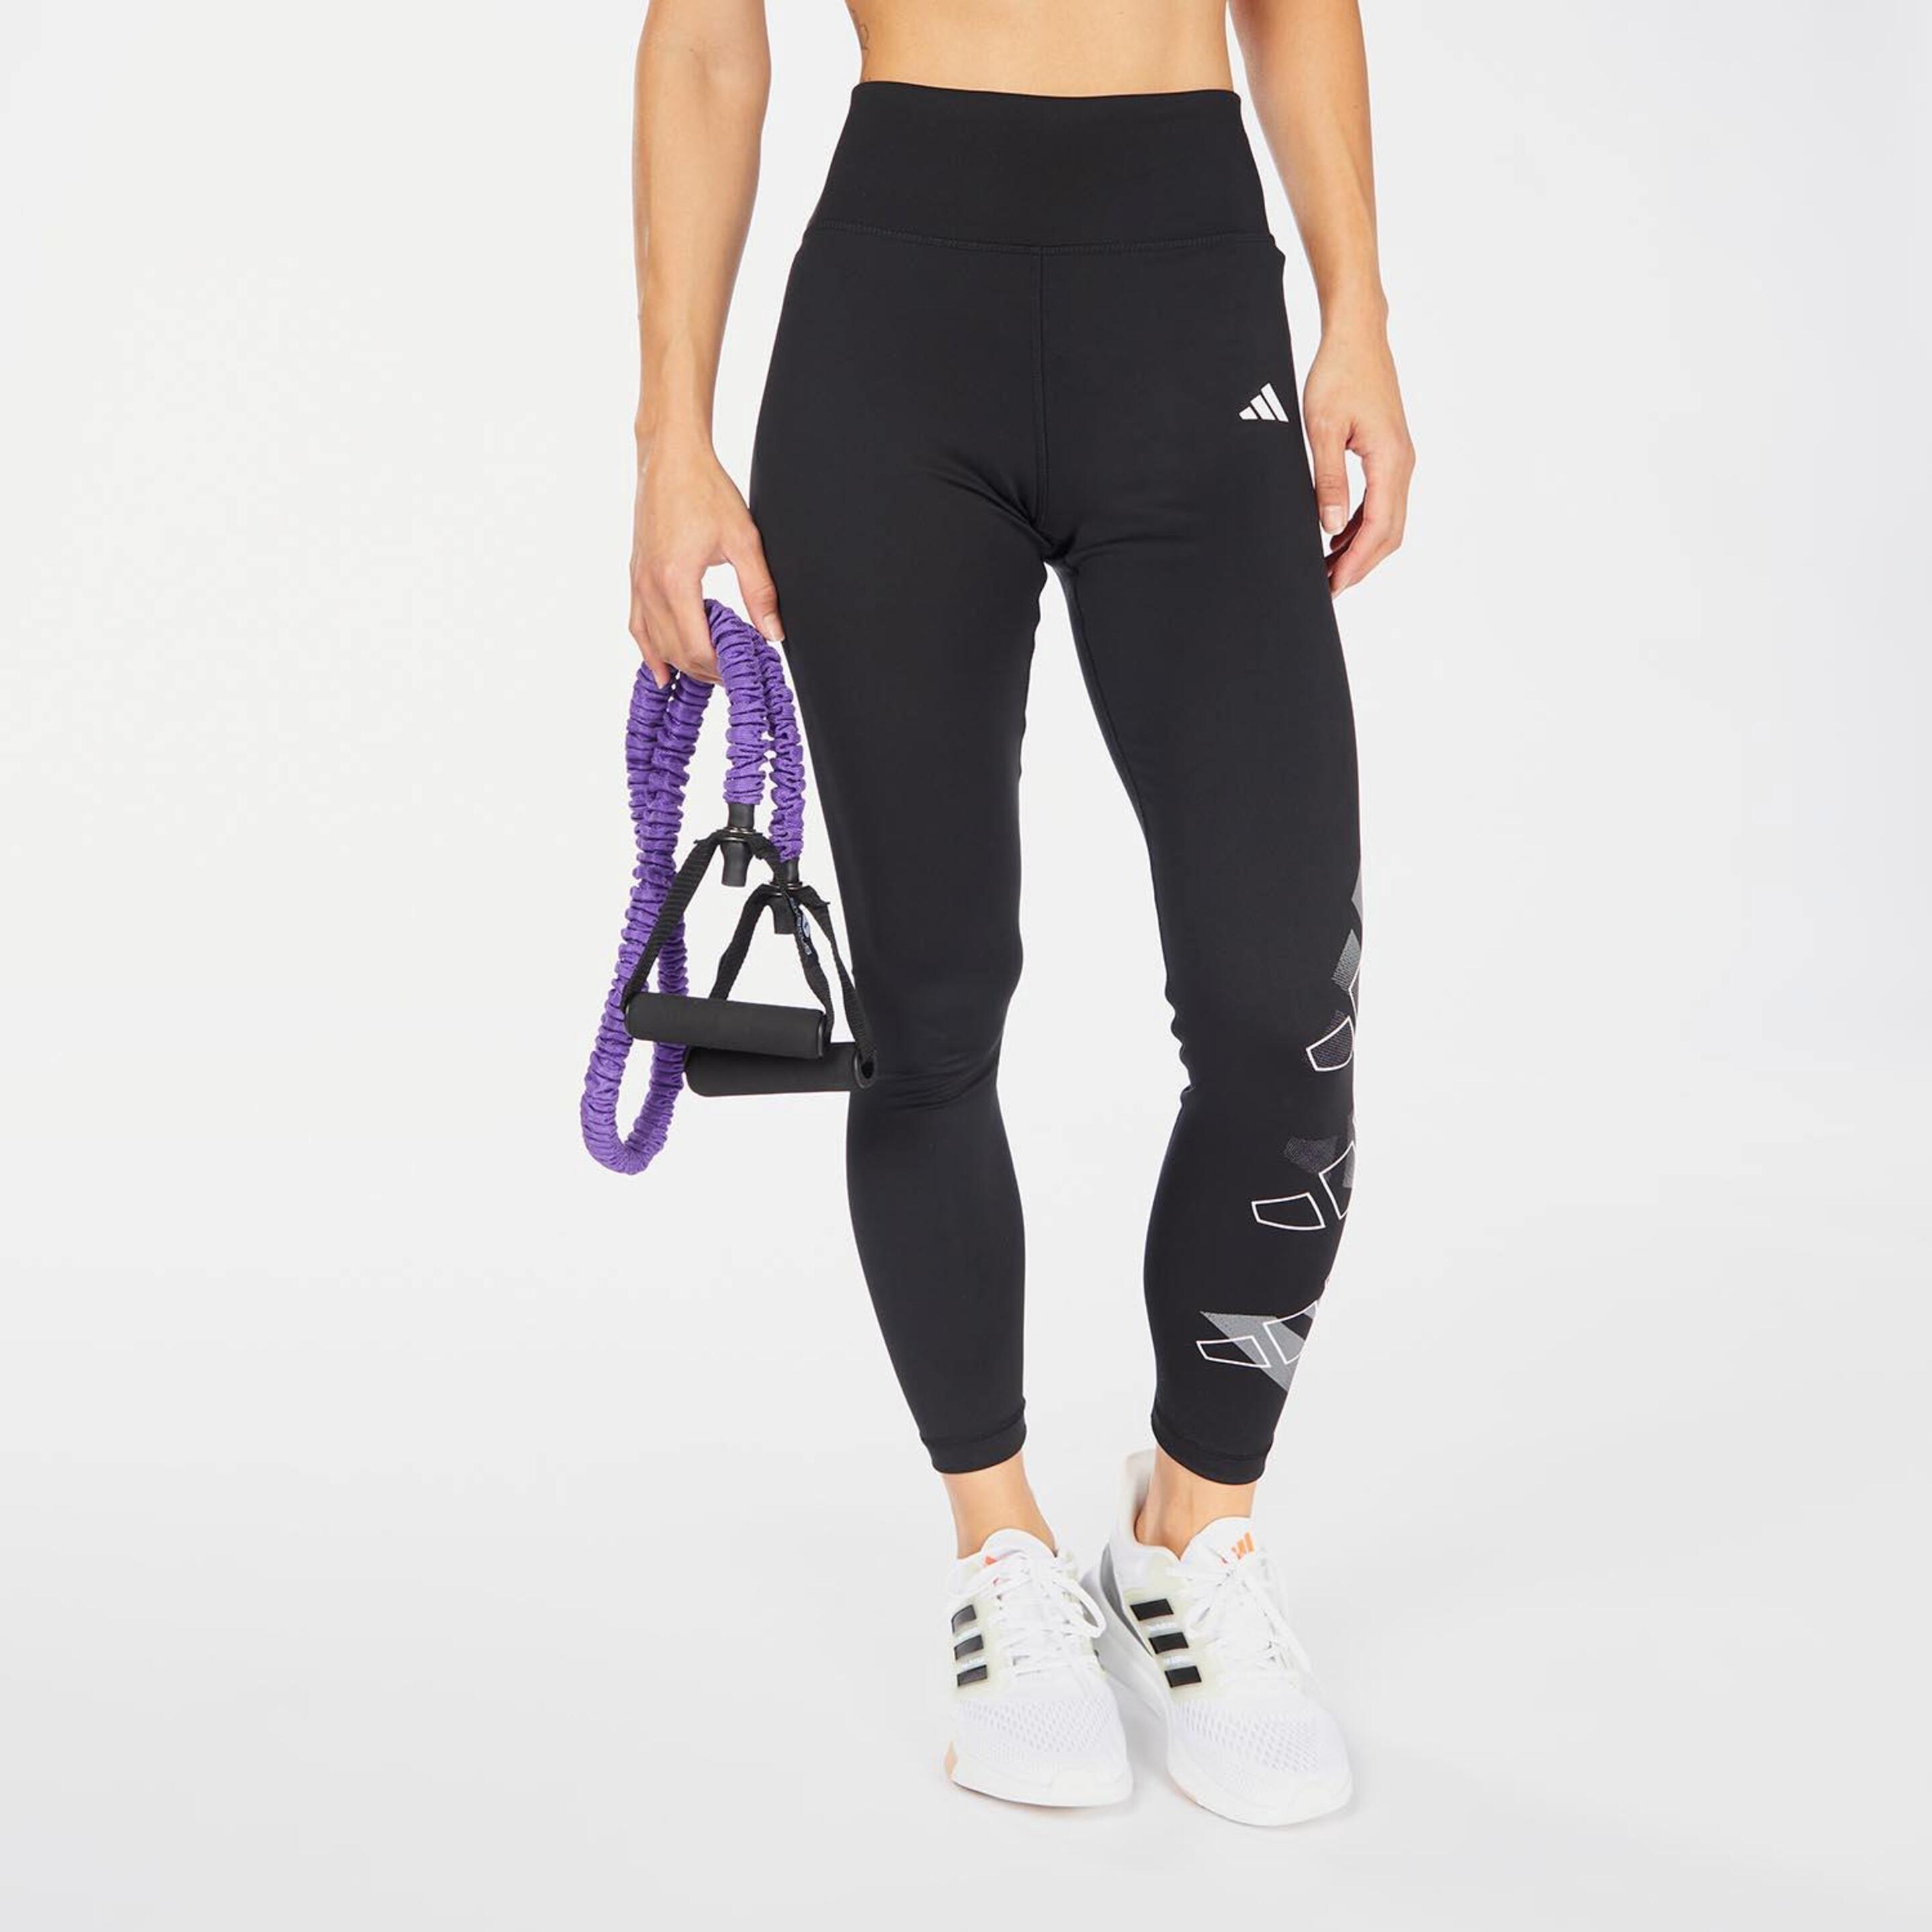 Mallas Largas adidas - negro - Leggings Fitness Mujer